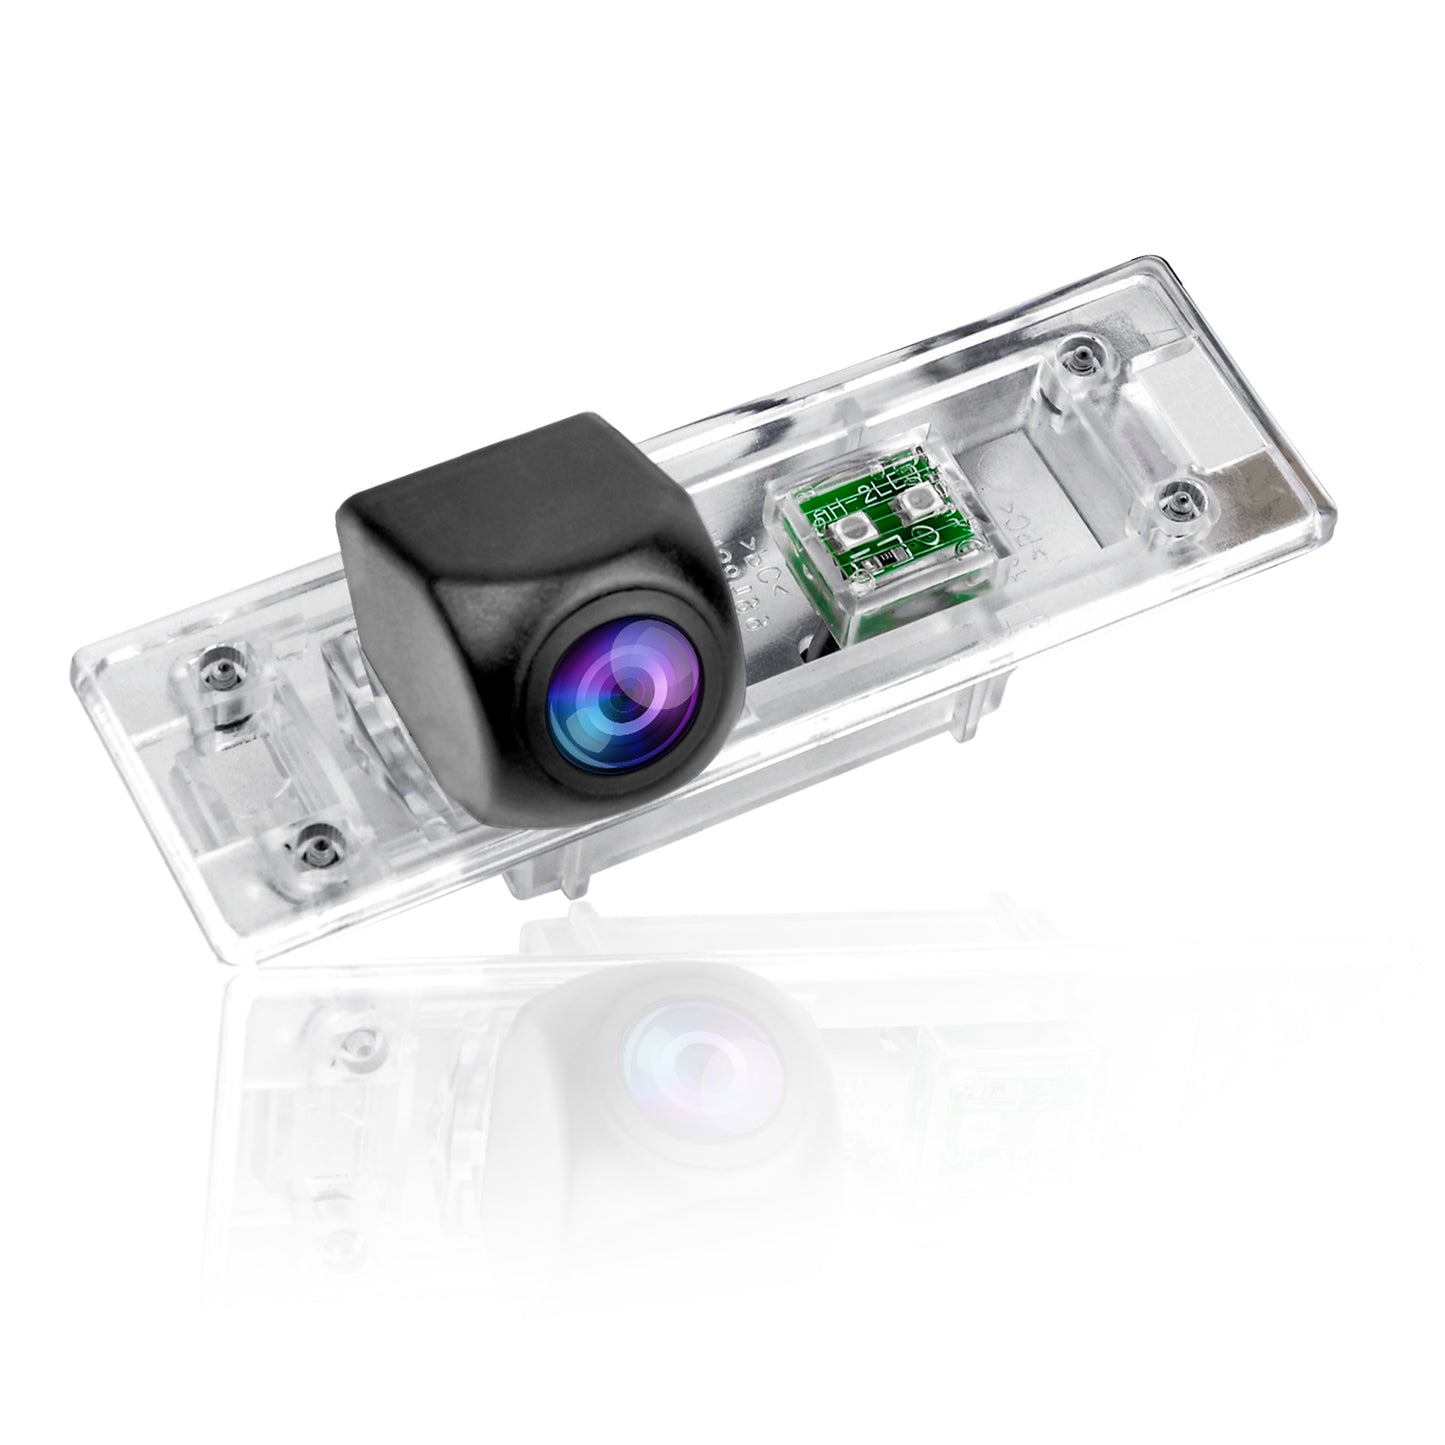 PEMP (8007) AHD Rear Camera 1080P 30FPS Parking Rear View Camera for BMW F20 E89 (AHD 103 * 31)